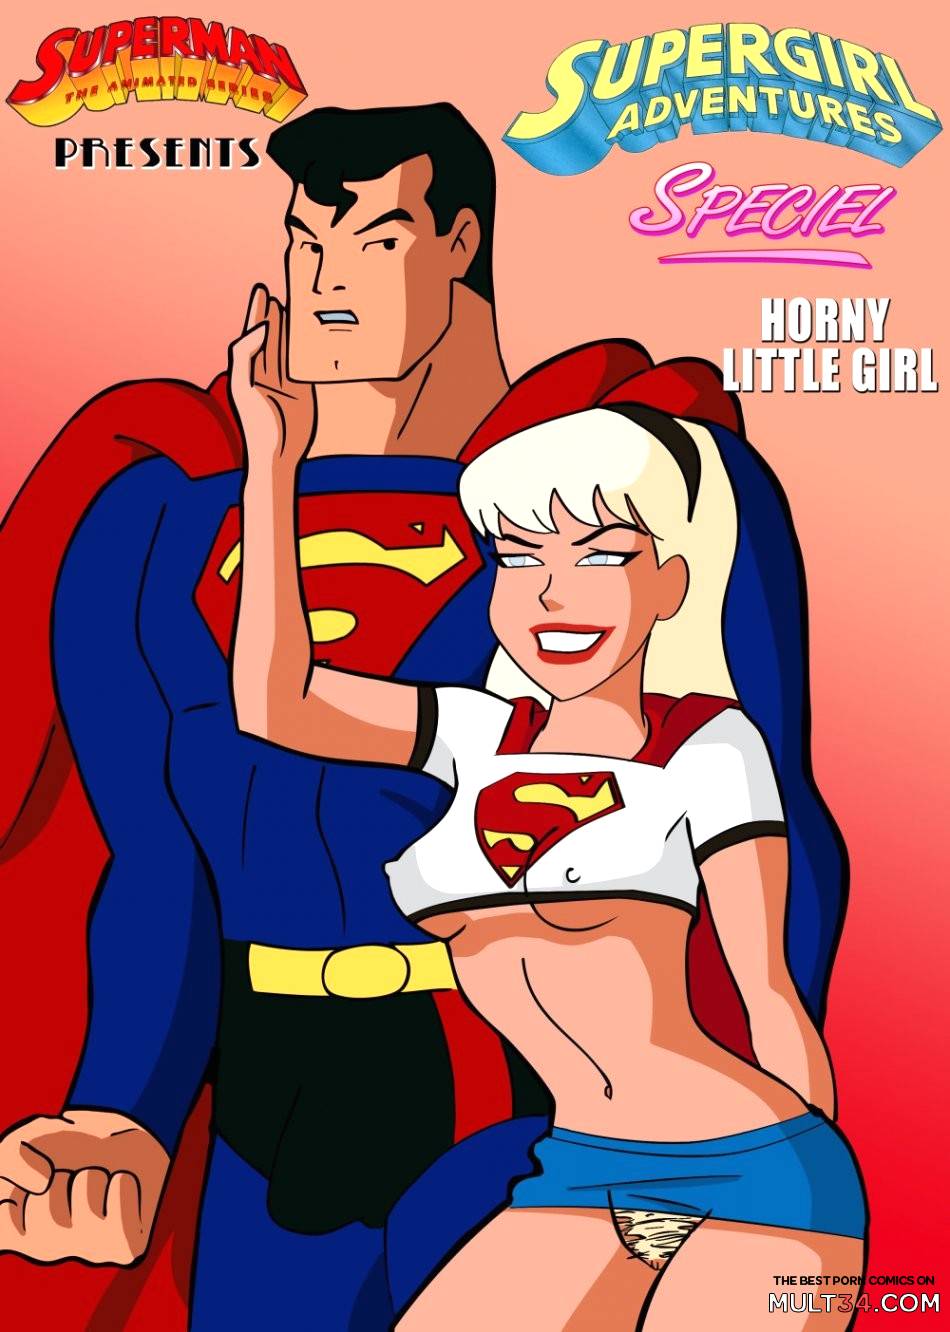 Supergirl - Supergirl Adventures porn comic - the best cartoon porn comics, Rule 34 |  MULT34